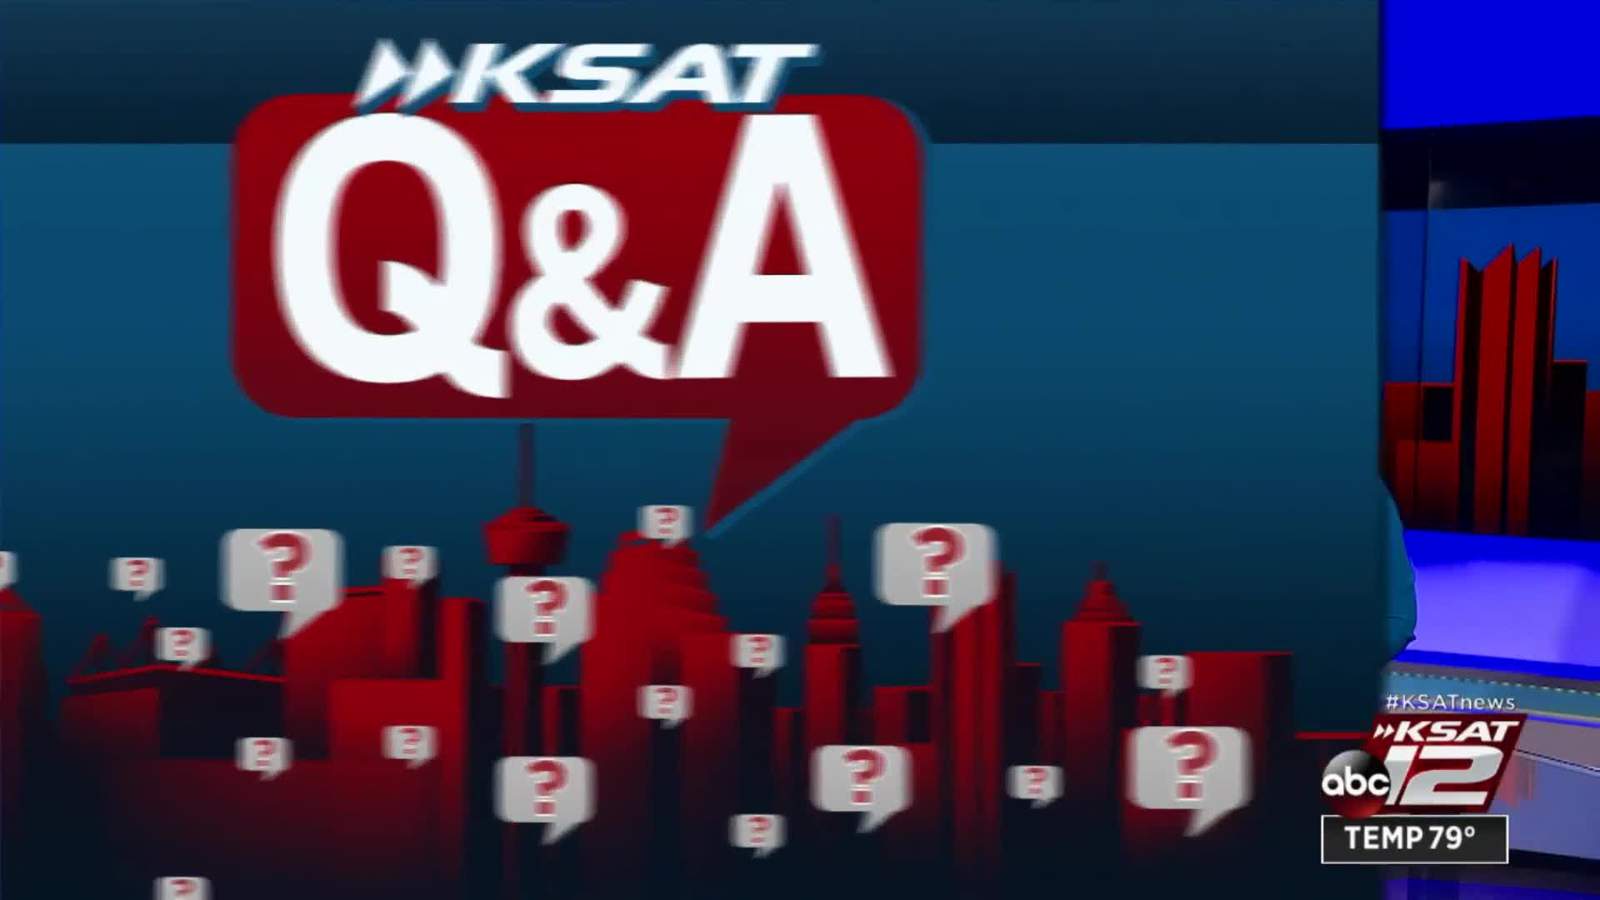 KSAT Q&A with Demonte Alexander of Bexar Facts (10 pm)